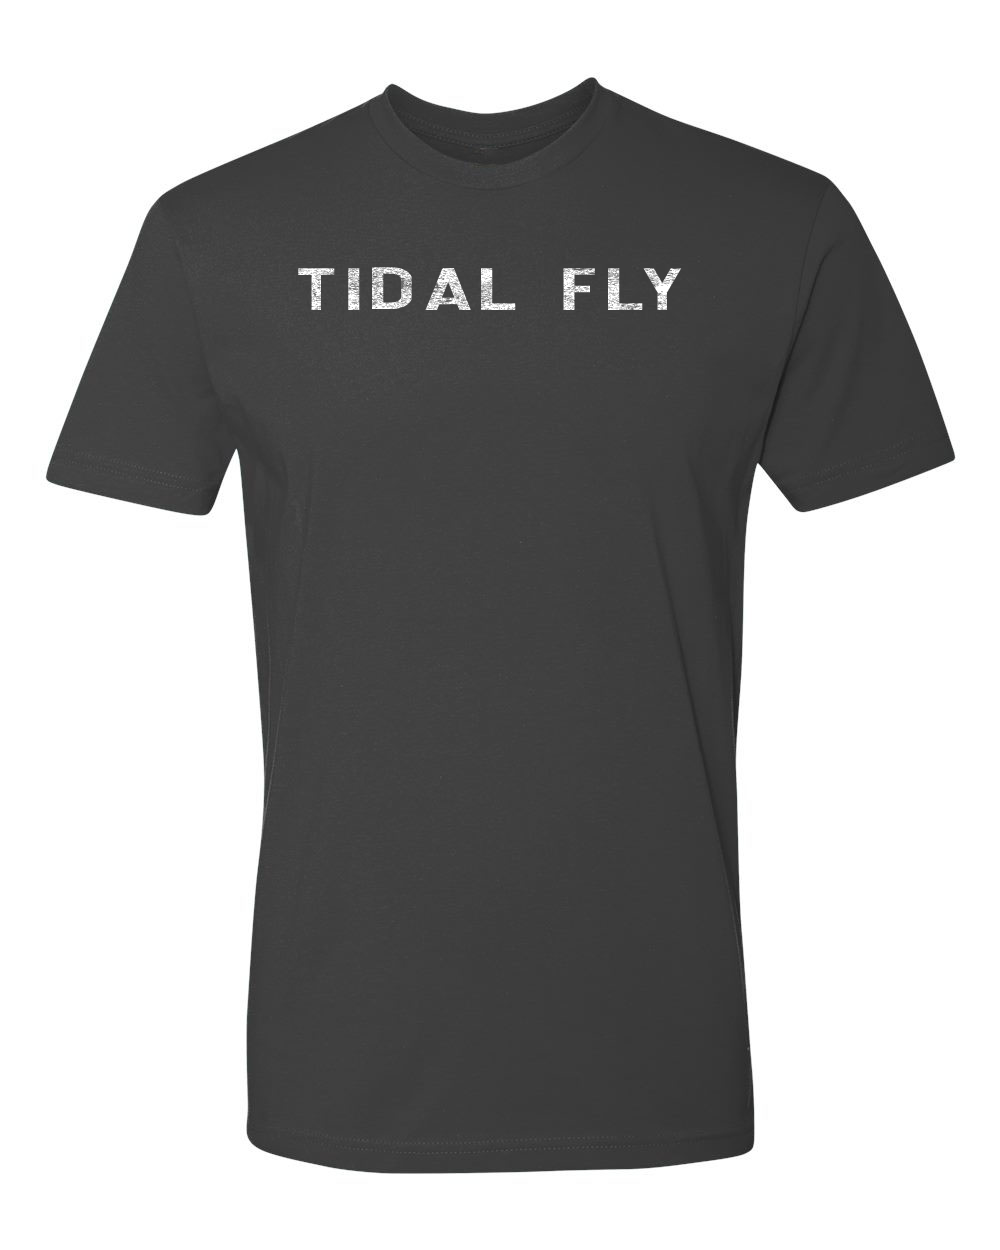 Short Sleeve Tidal Fly 100% cotton front font, full back logo